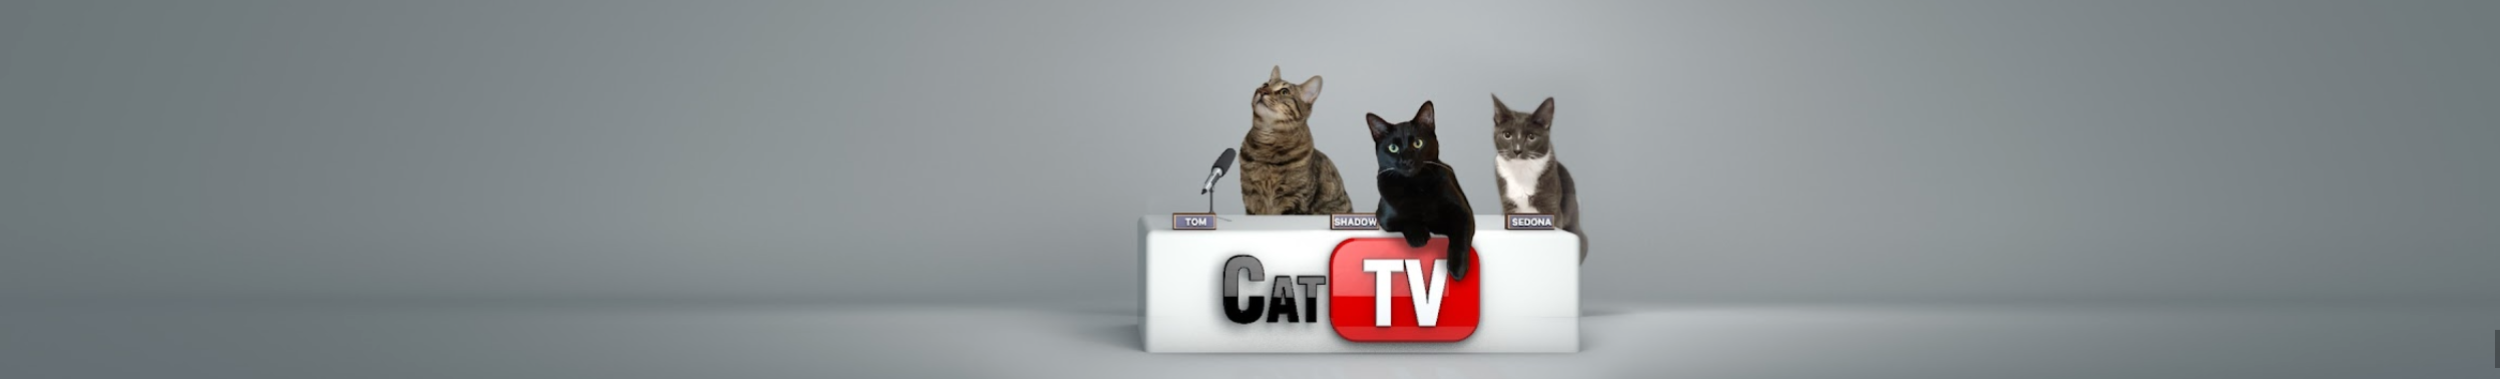 CAT TV GAMES - CAT TV Games